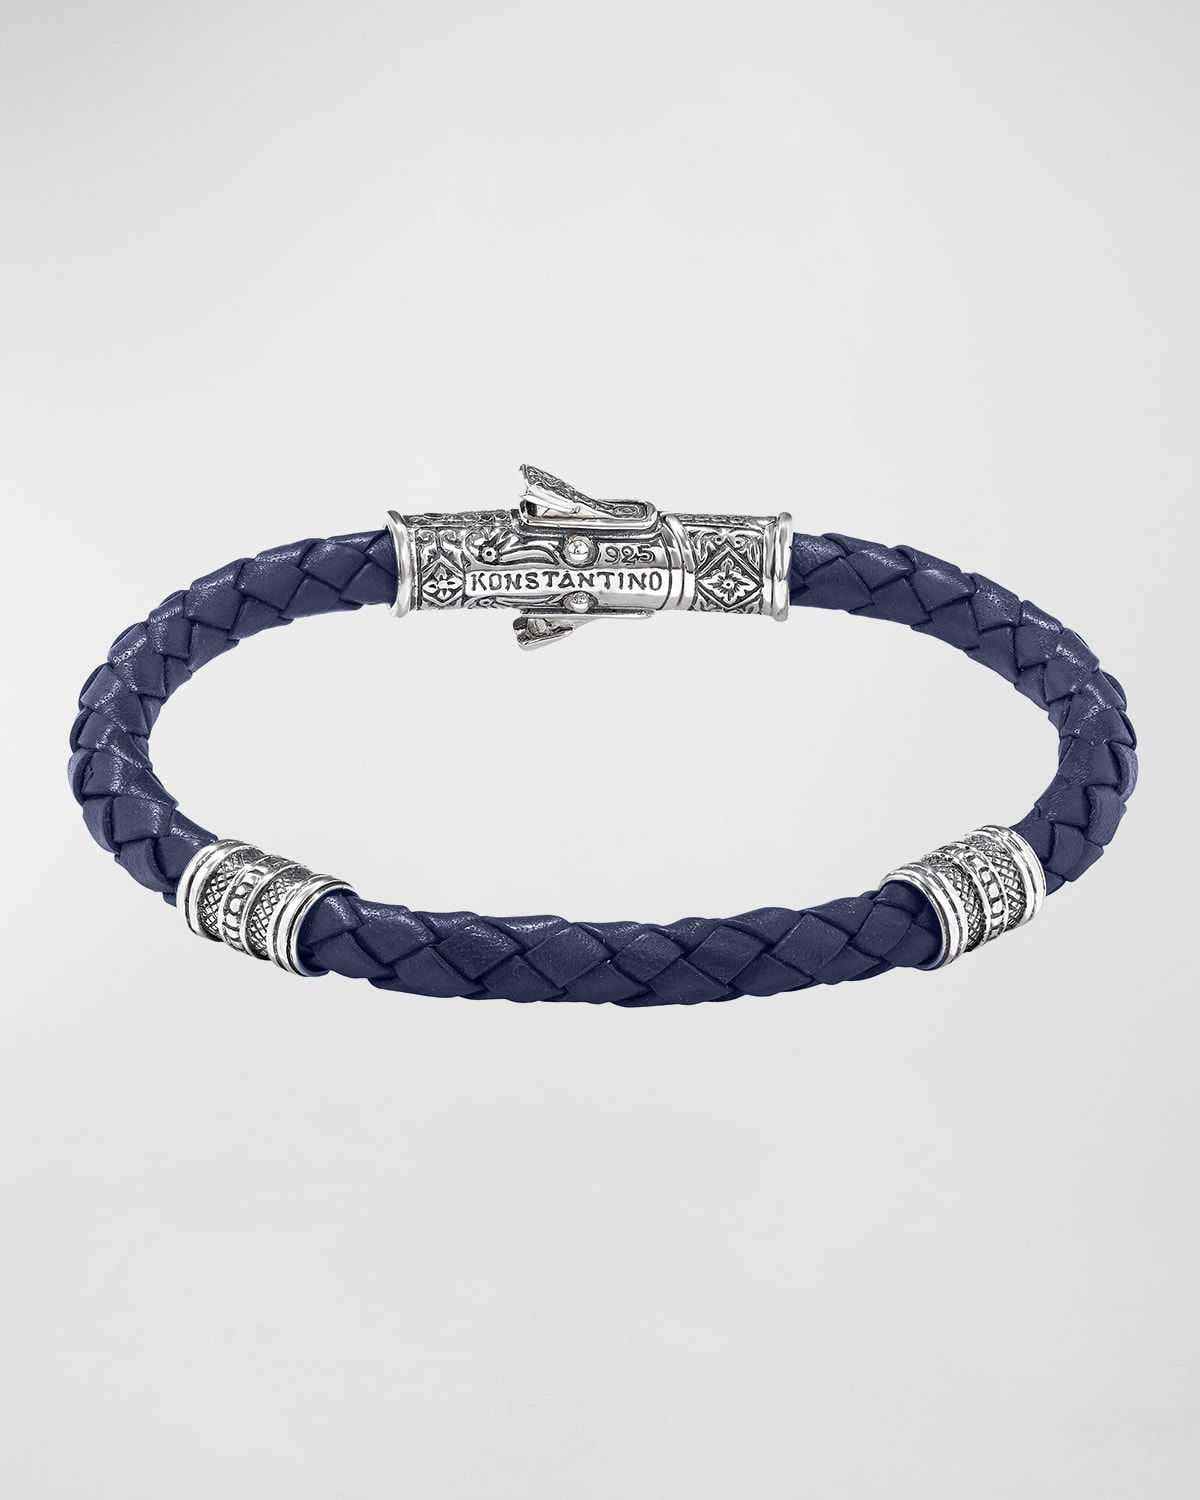 Konstantino Men's Braided Leather Bracelet w/ Sterling Silver